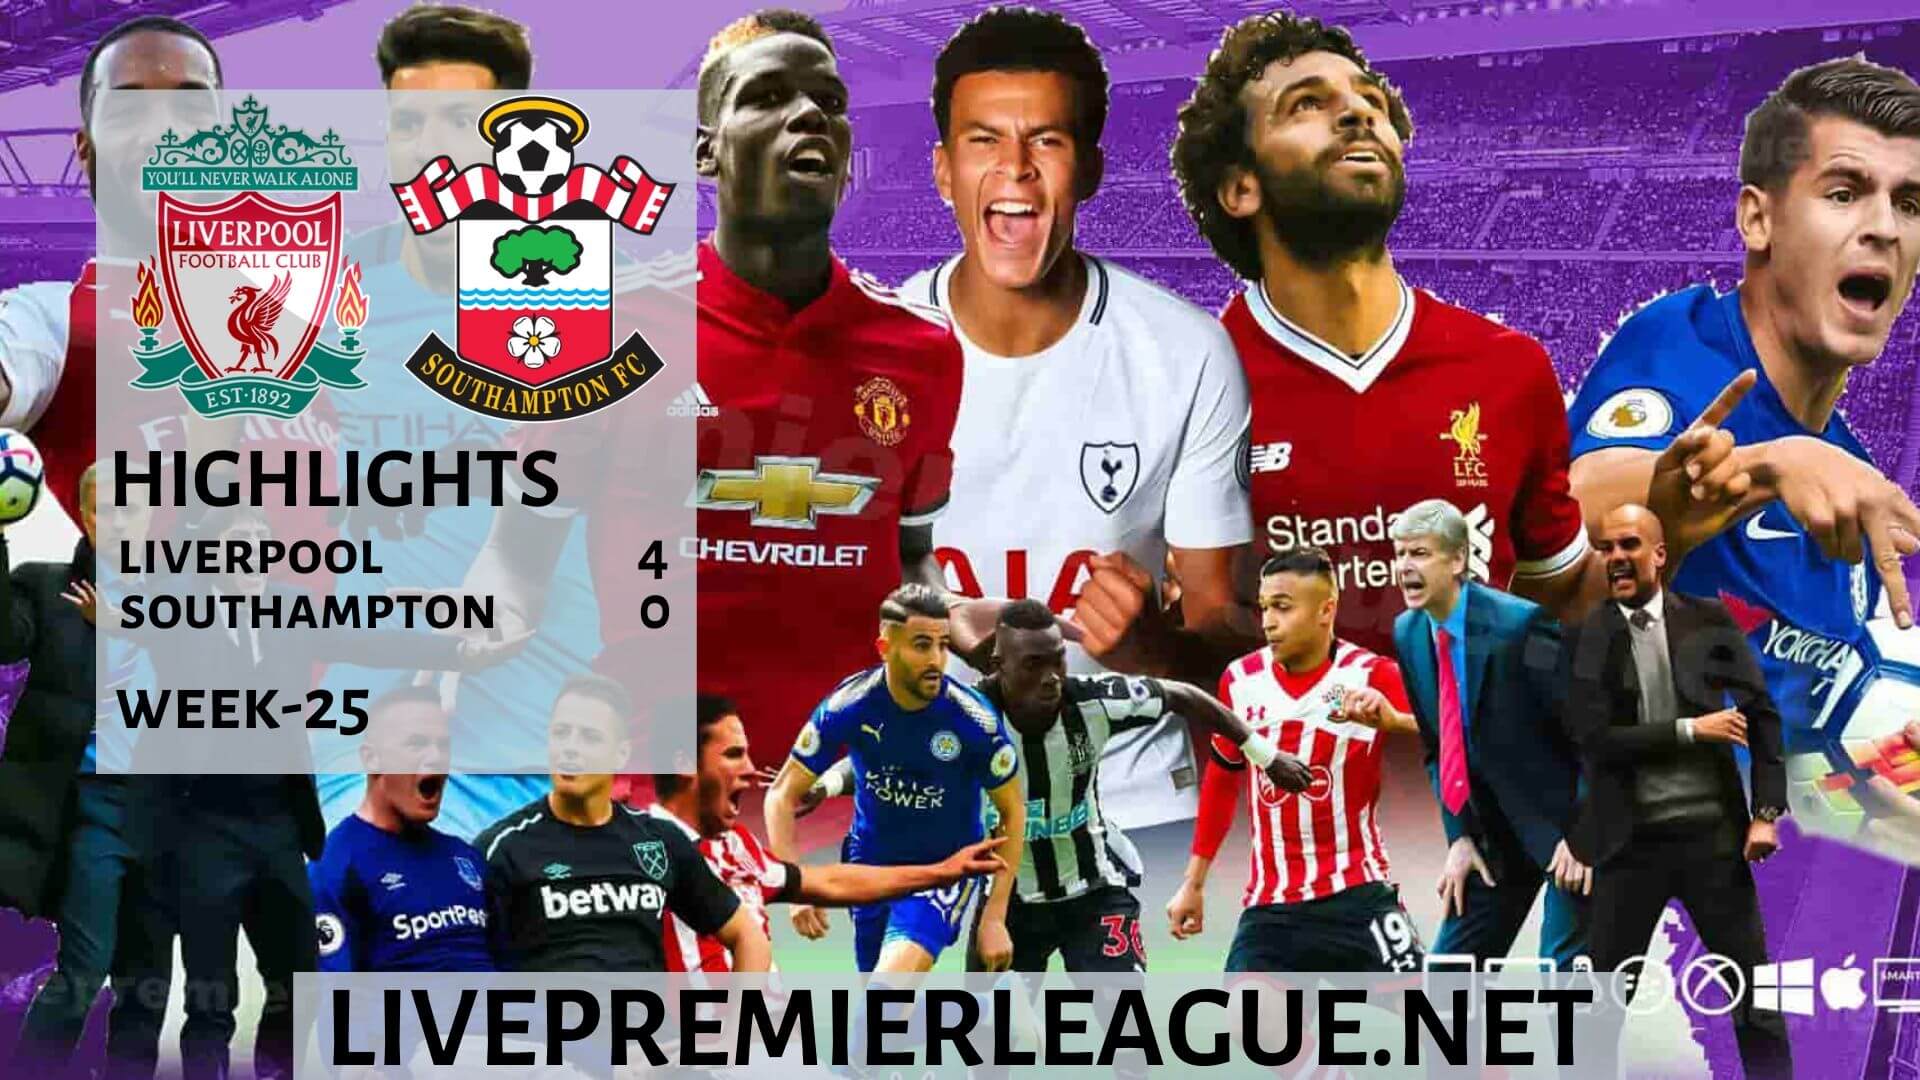 Liverpool Vs Southampton Highlights 2020 Week 25